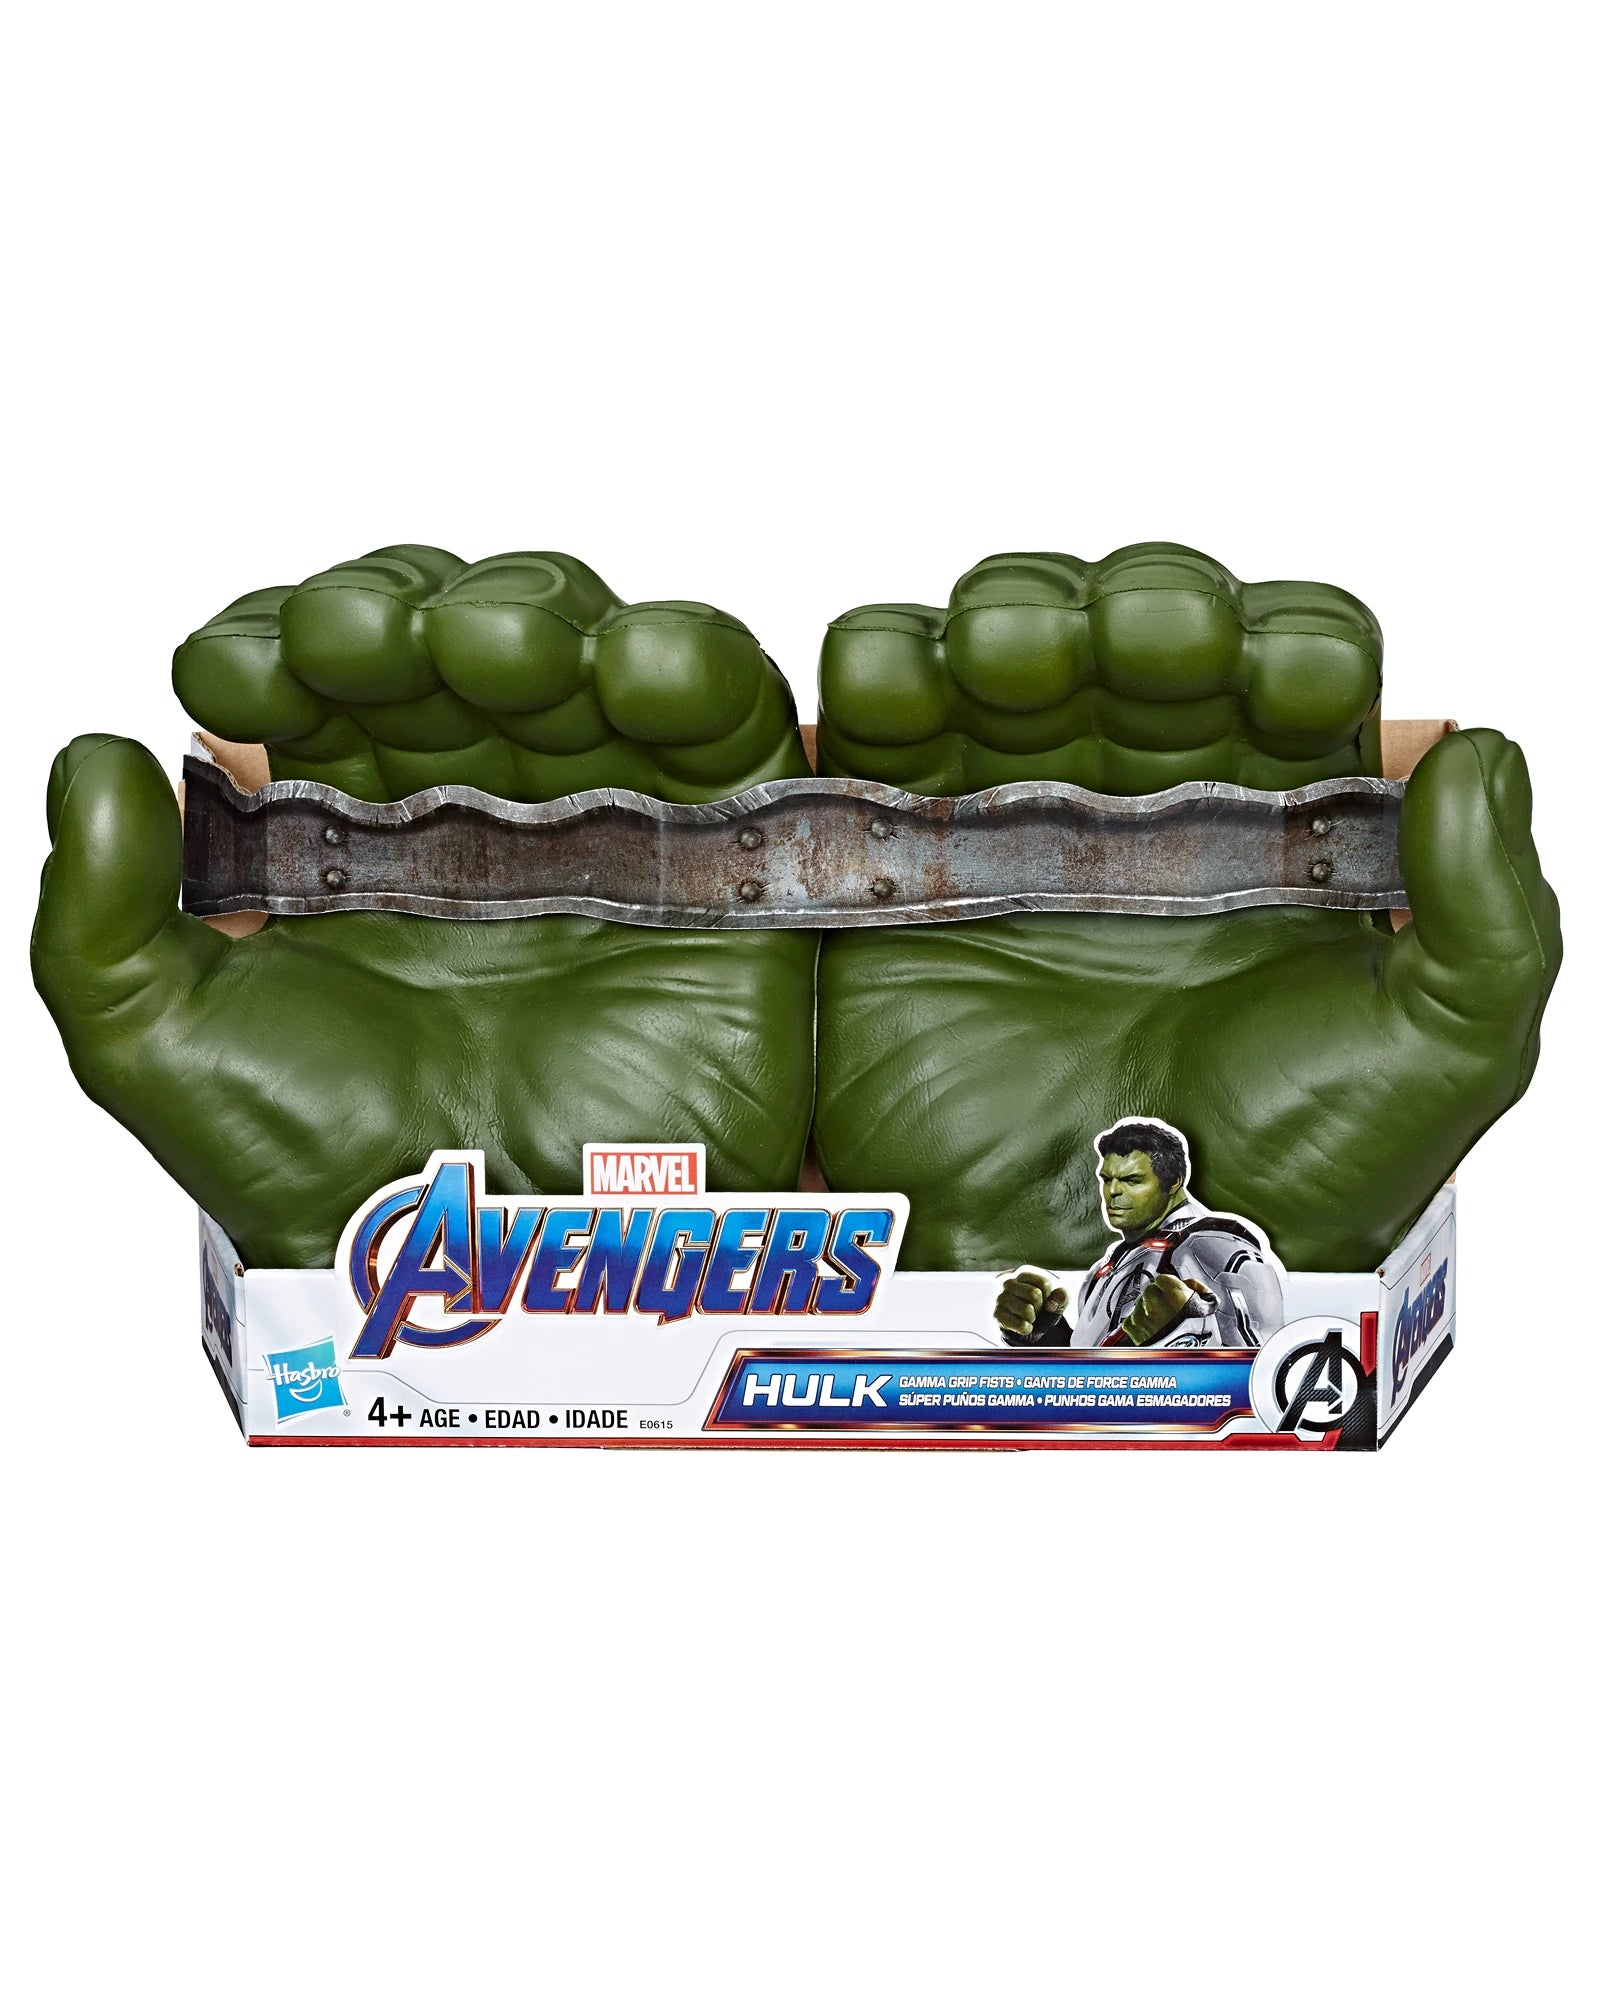 Avengers Gamma Grip Hulk Fists - Entertainment Earth